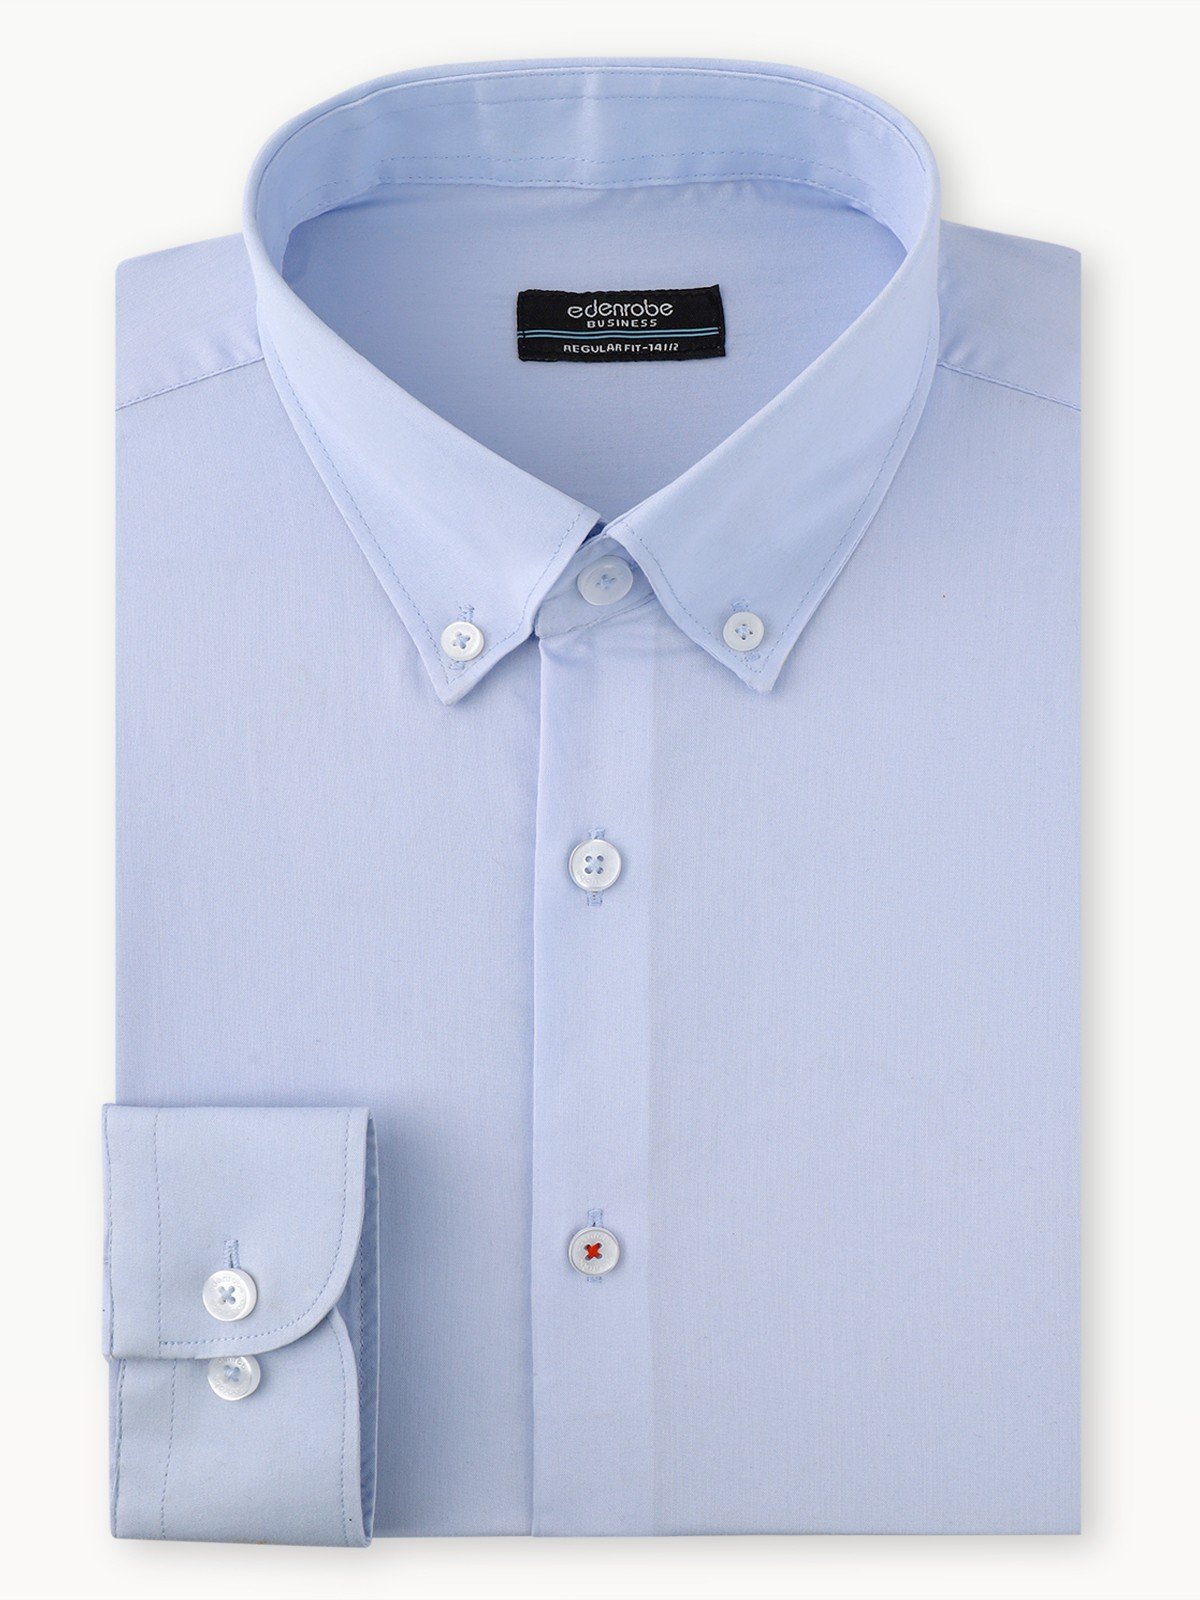 Men's Sky Blue Shirt Plain - EMTSB22-139